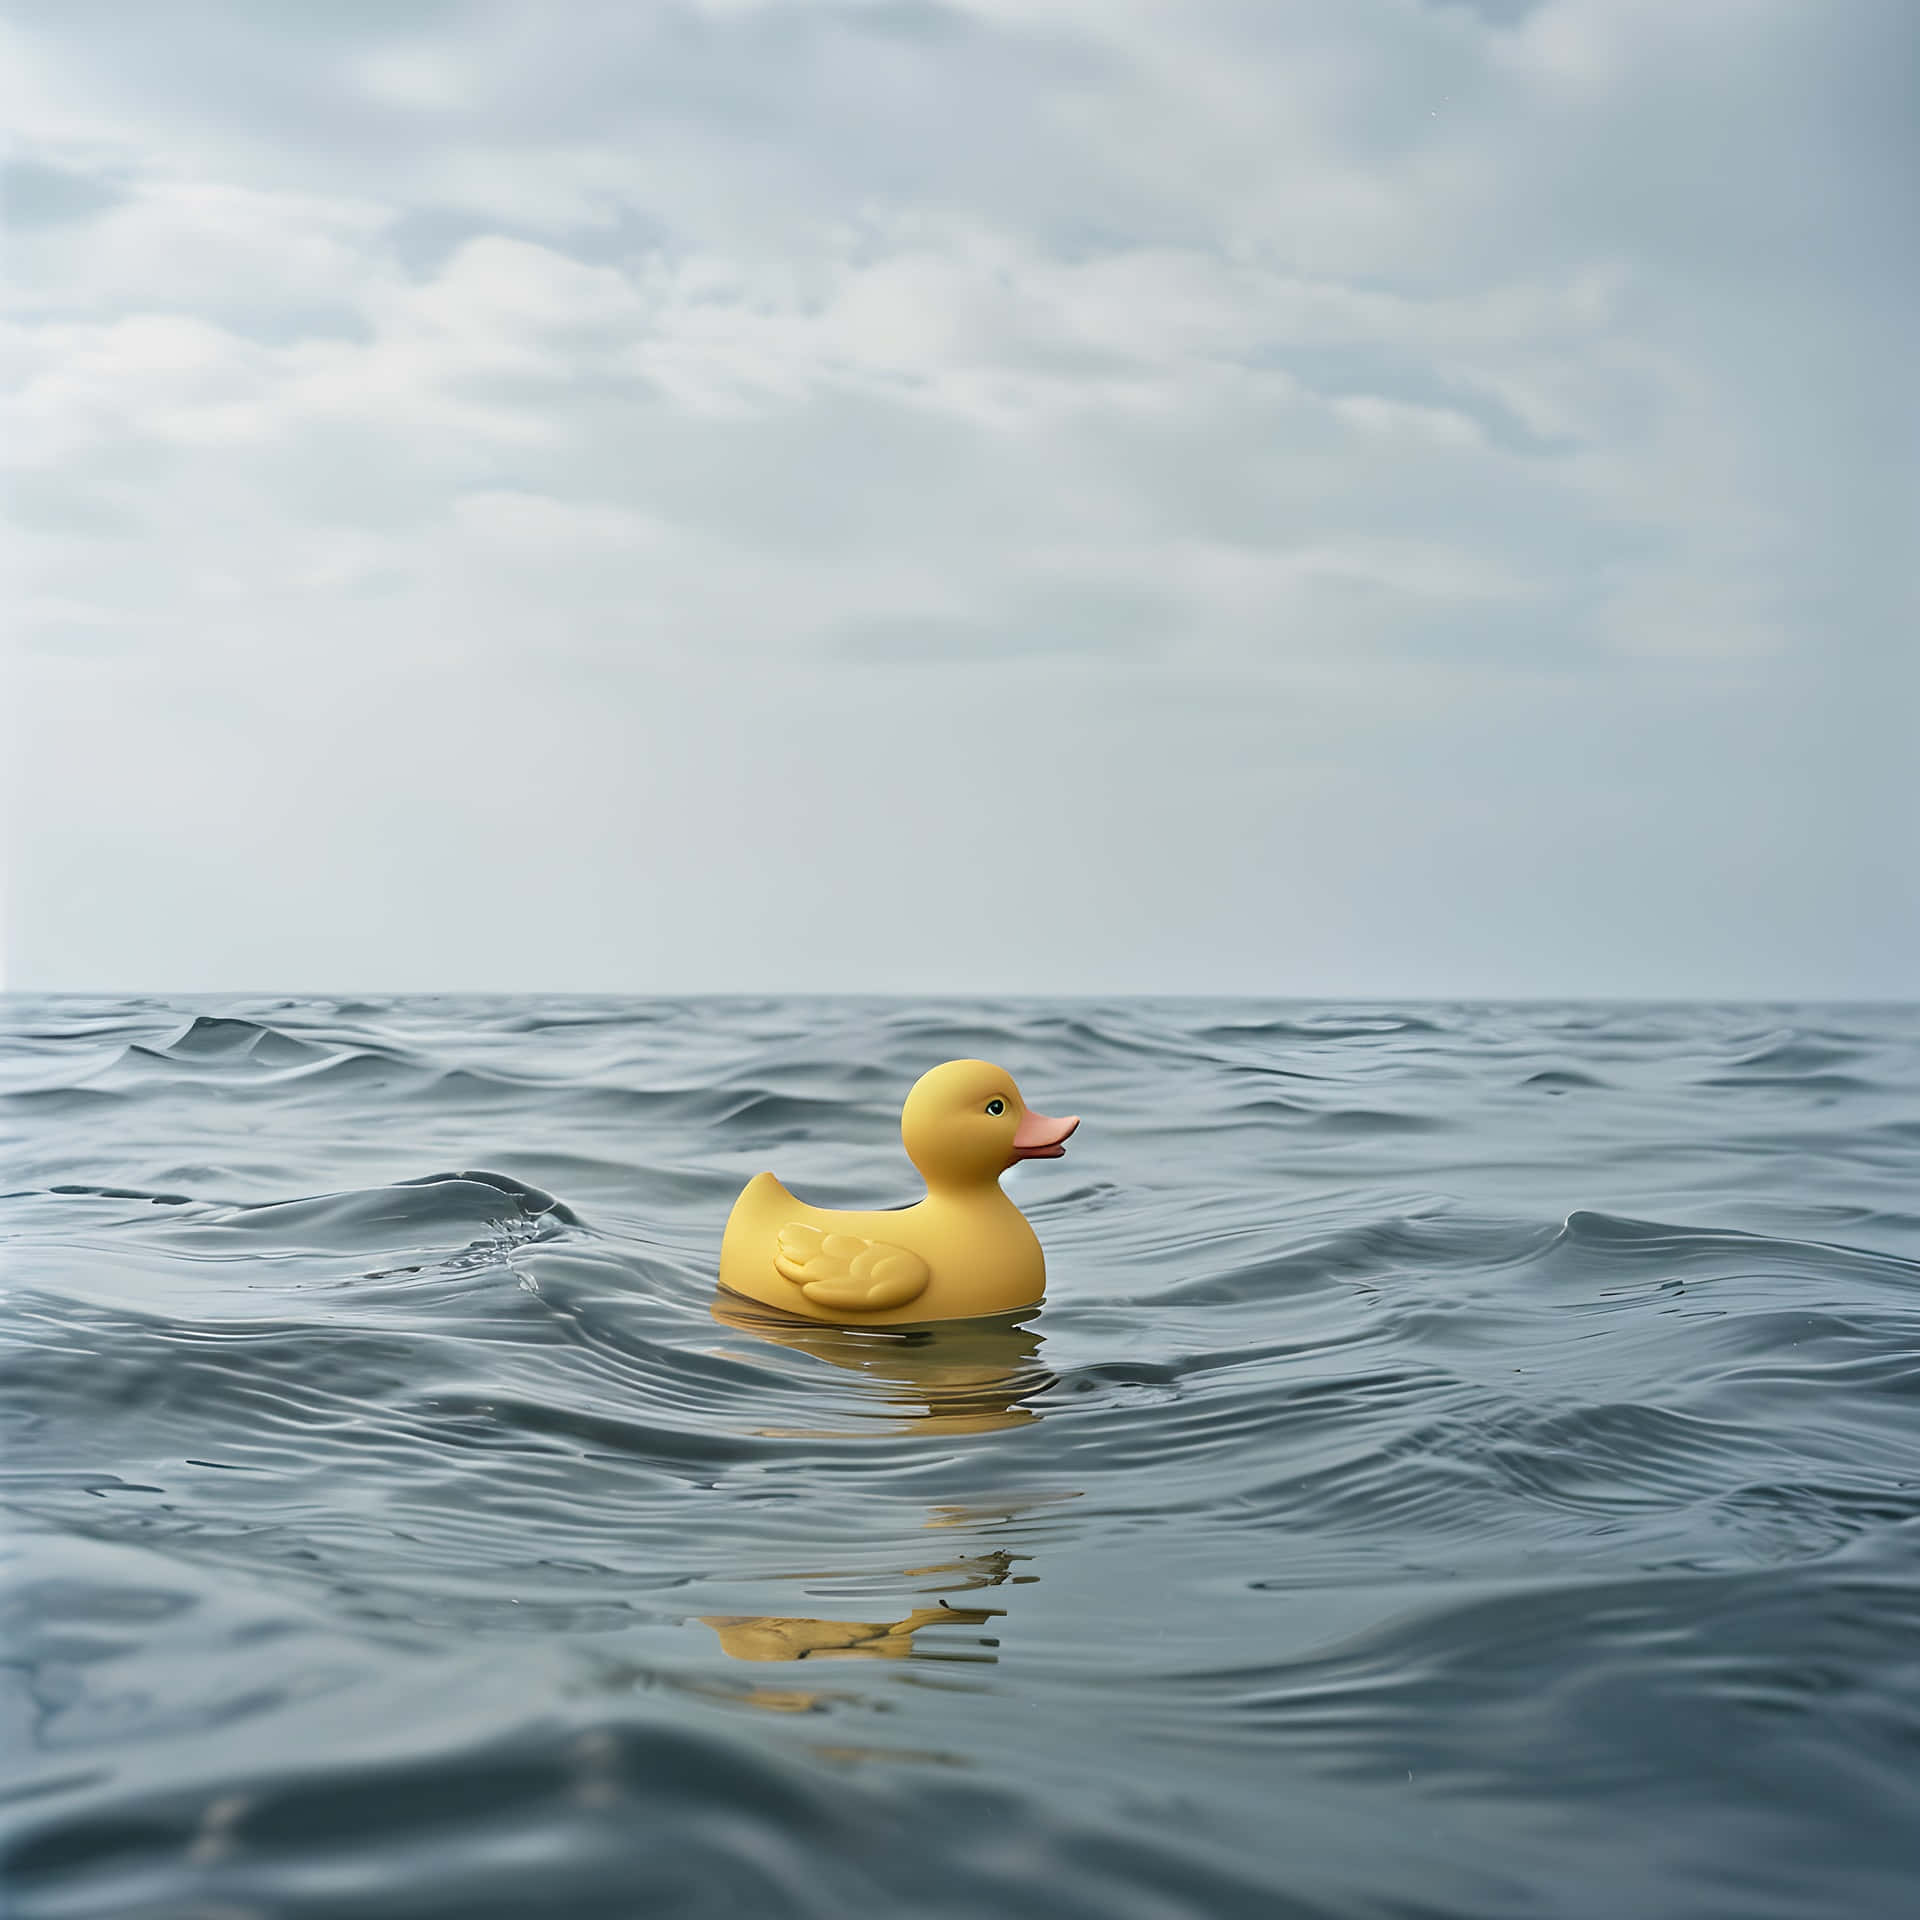 Rubber Duck Adriftat Sea Wallpaper